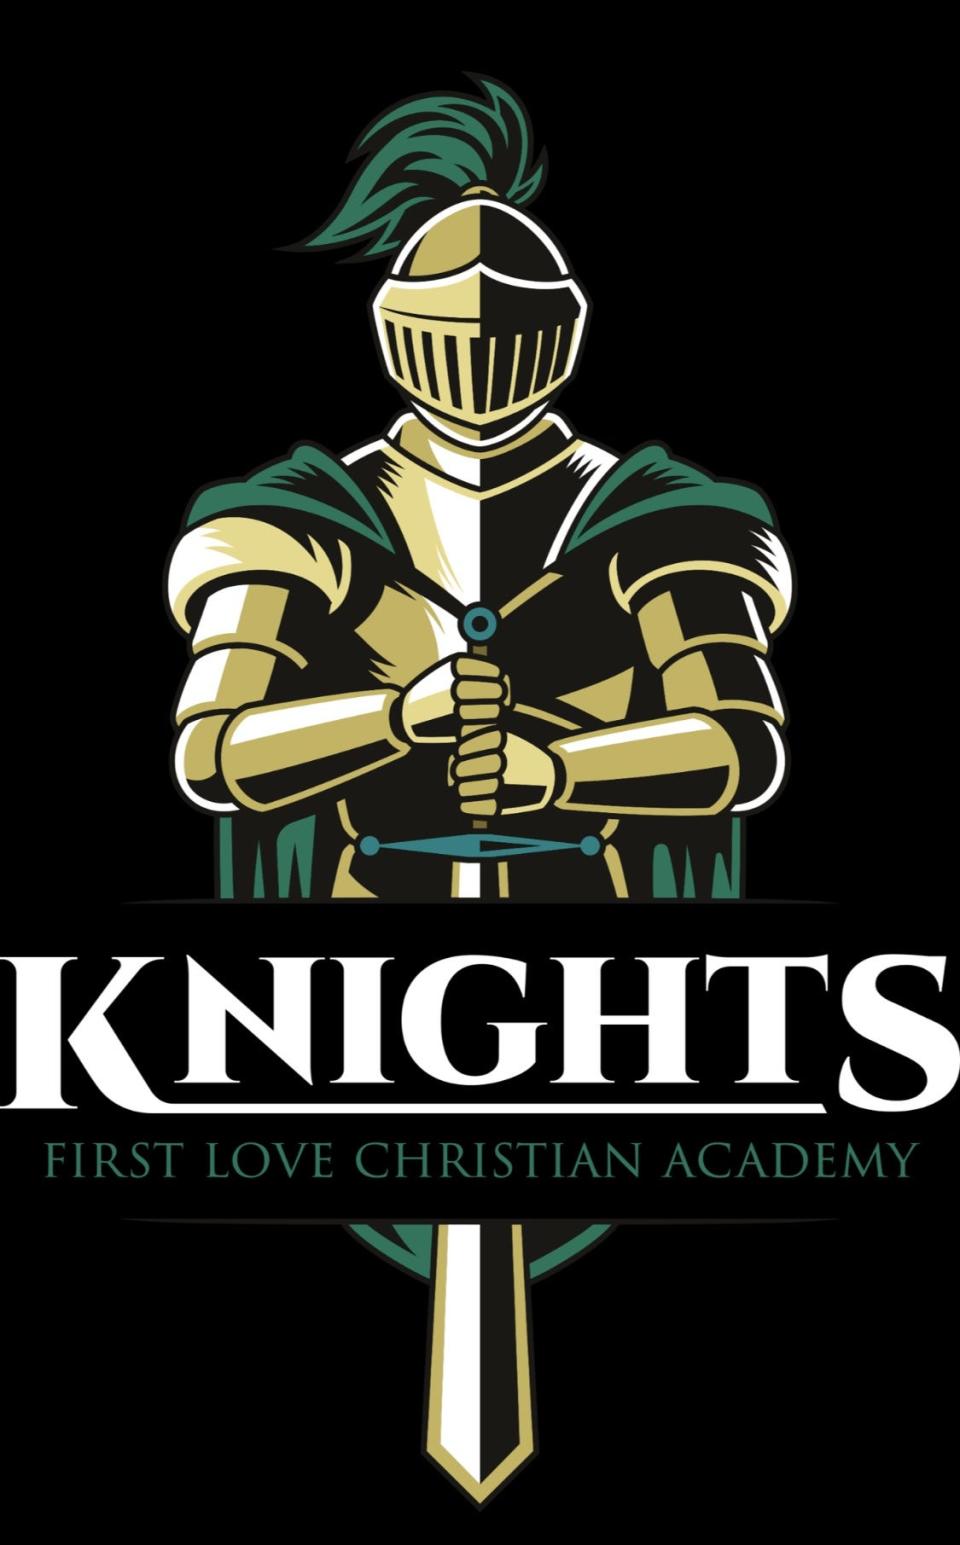 First Love Christian Academy